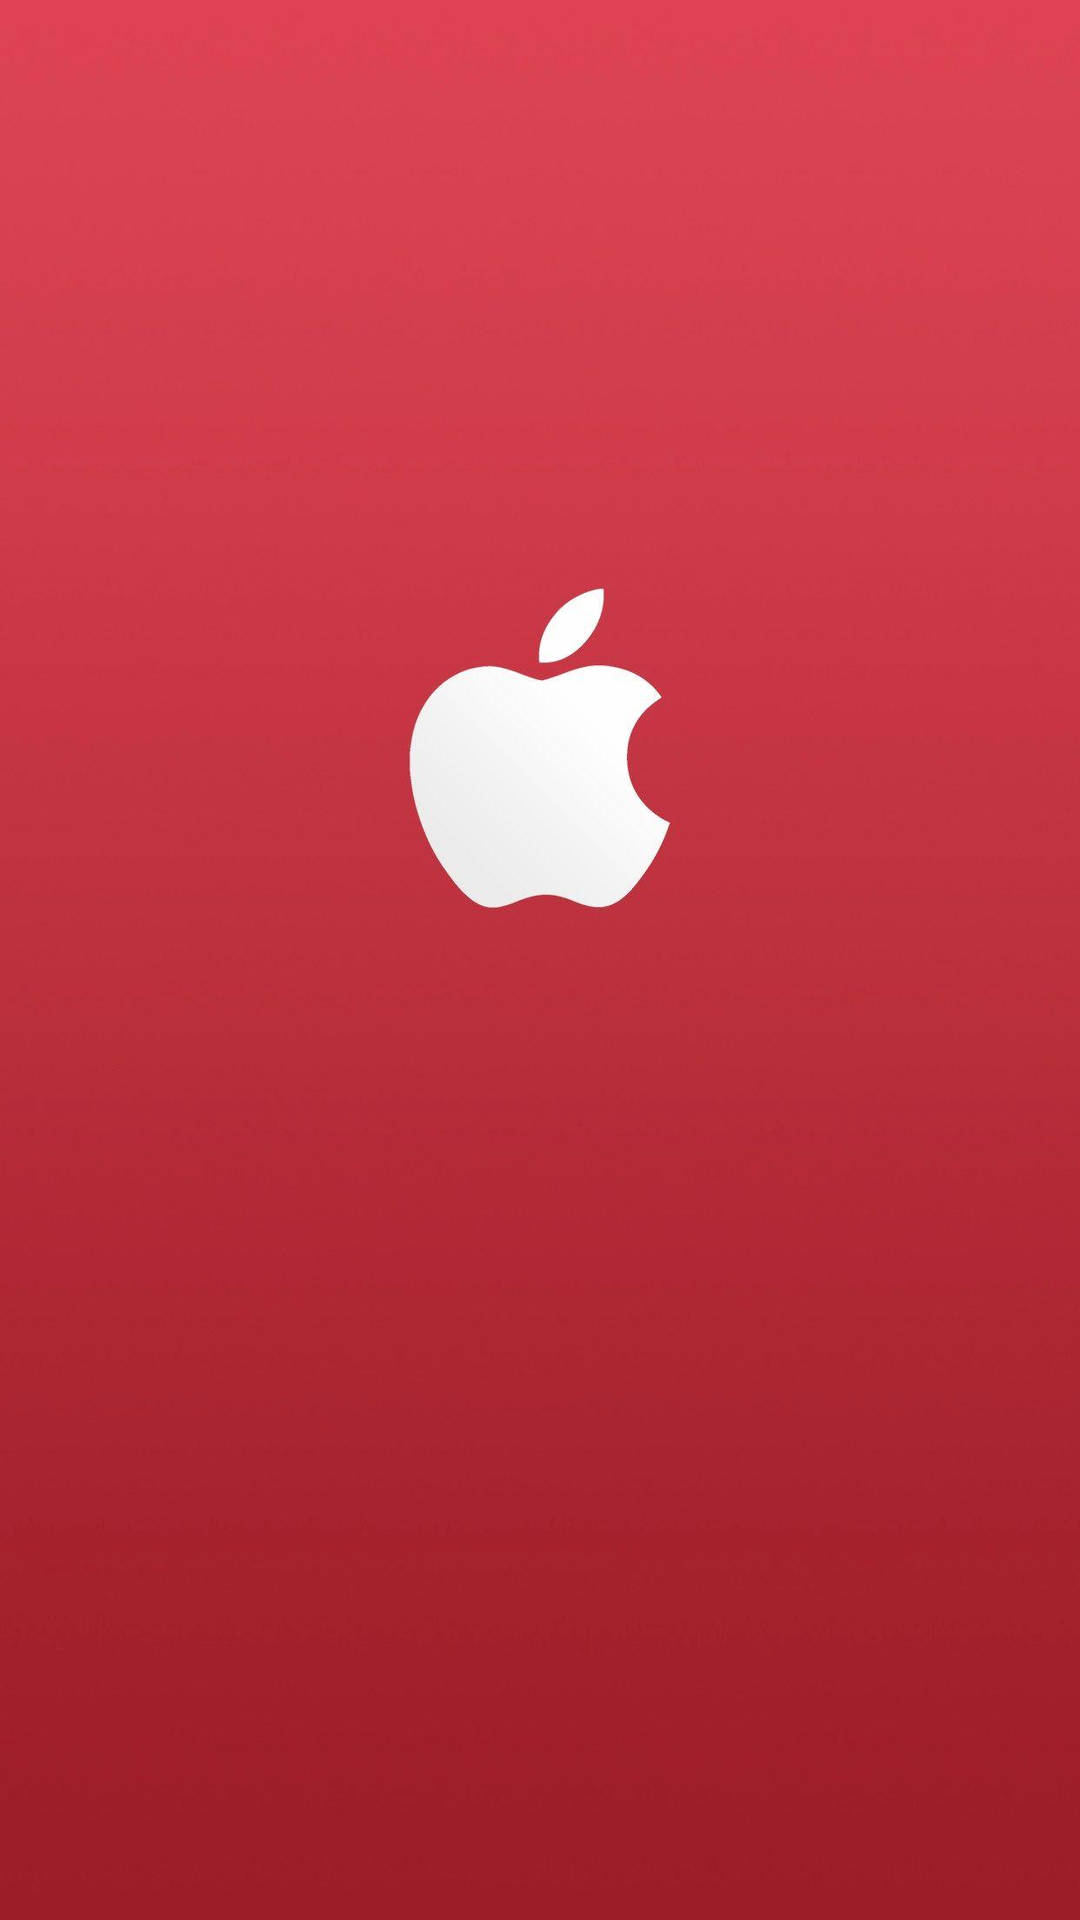 Iphone X Original White Apple Logo On Red Background Background